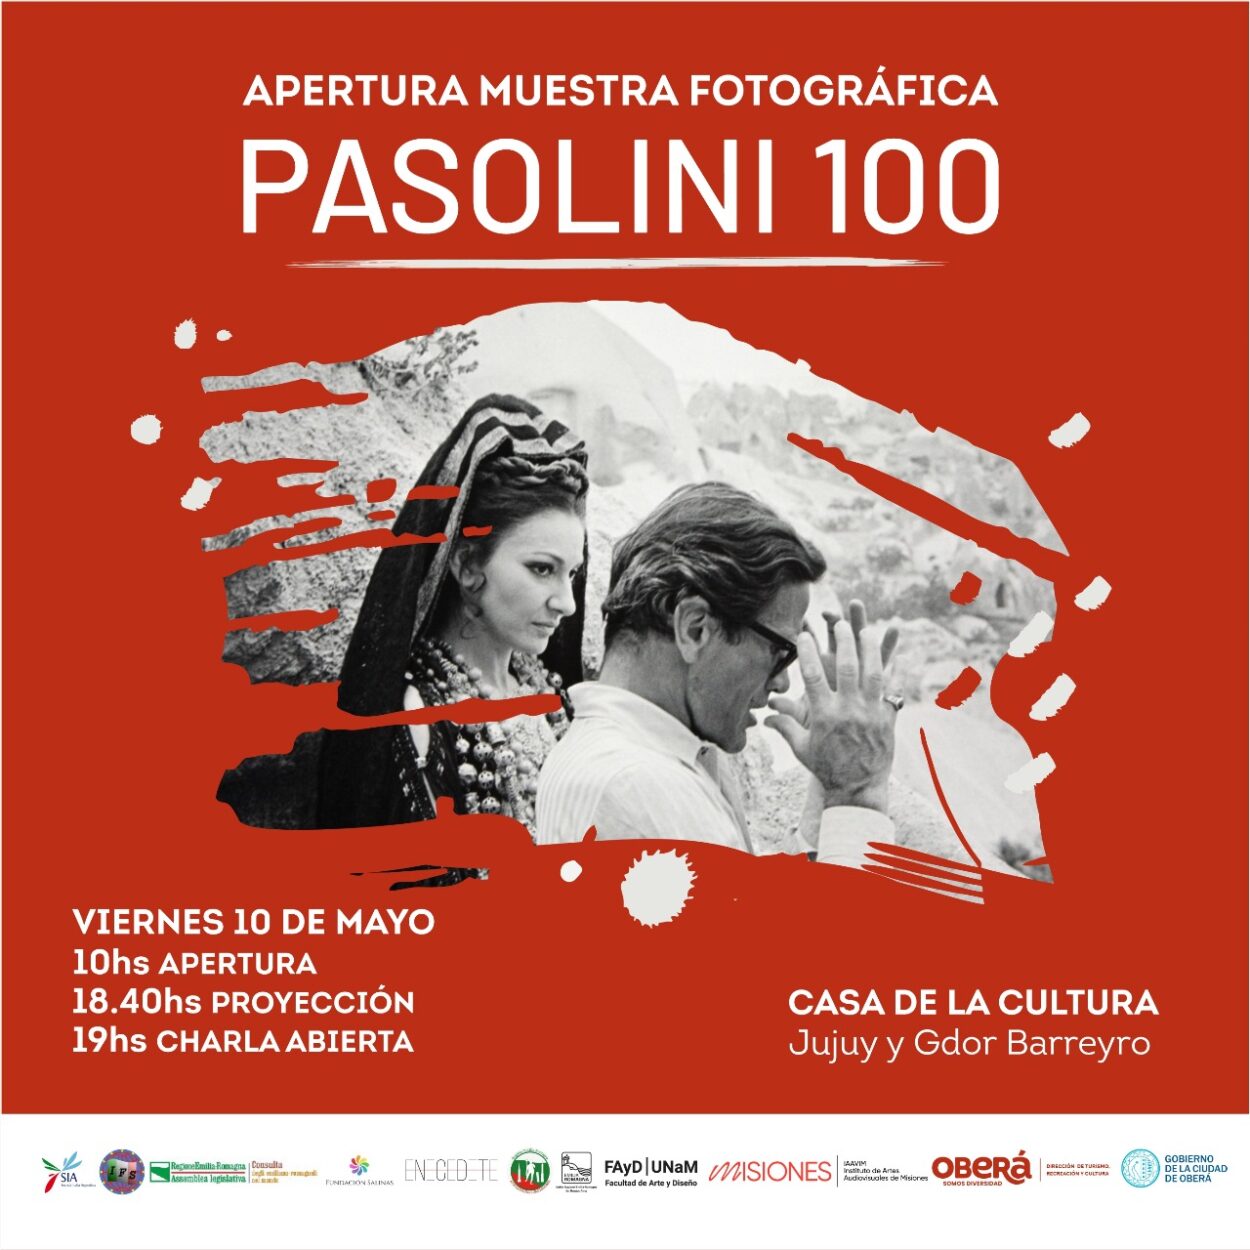 La muestra “Pasolini 100” llega a Oberá imagen-2